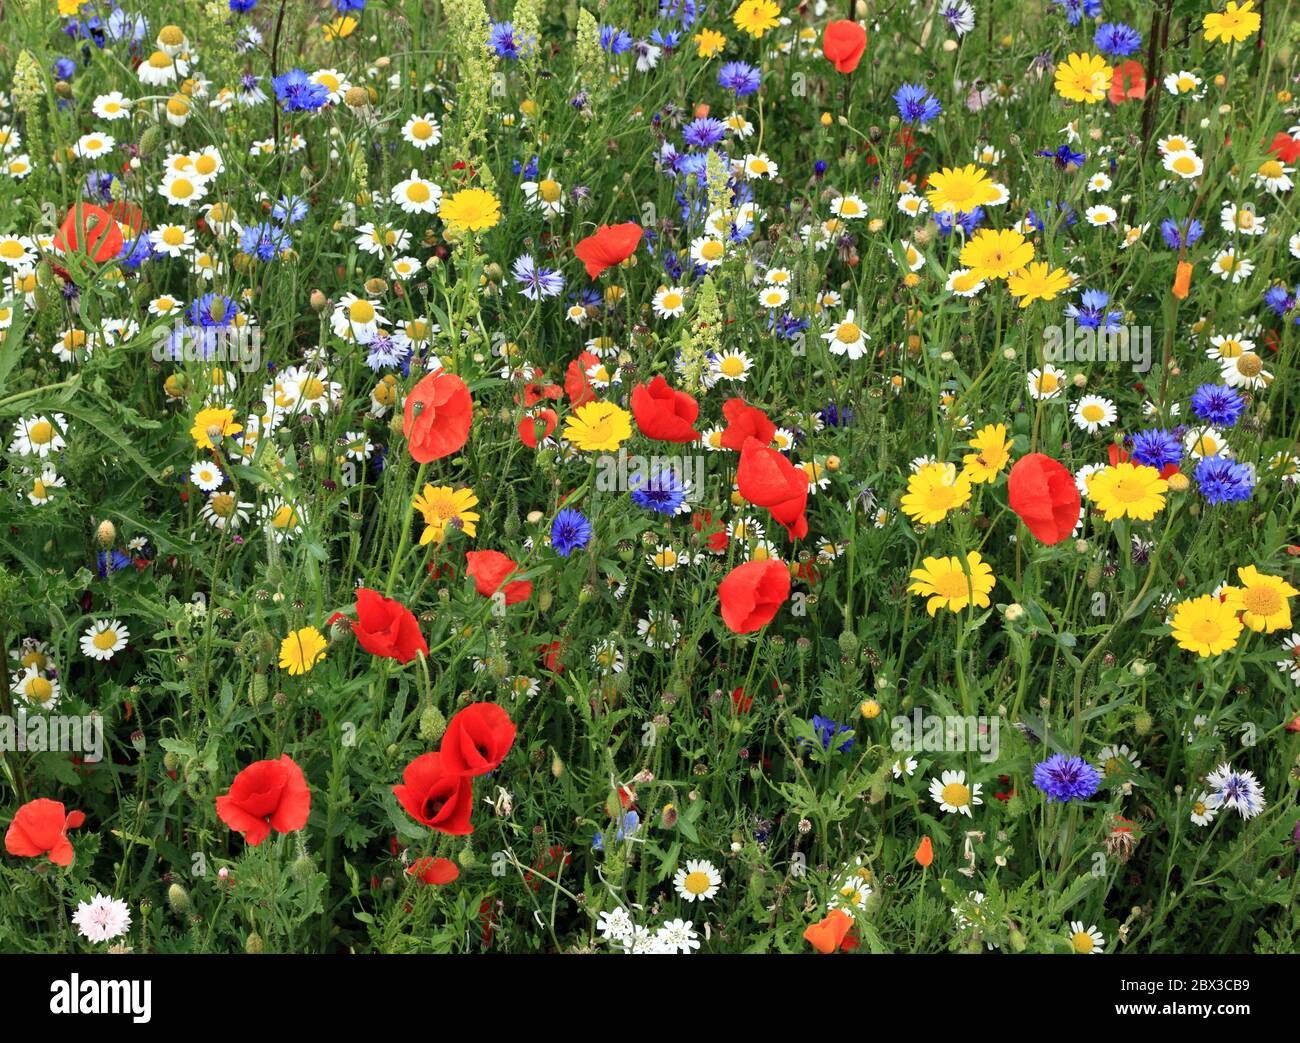 Wild flower, border, garden, poppy, daisy, cornflower, field poppies, daisies, cornflowers, colourful Stock Photo